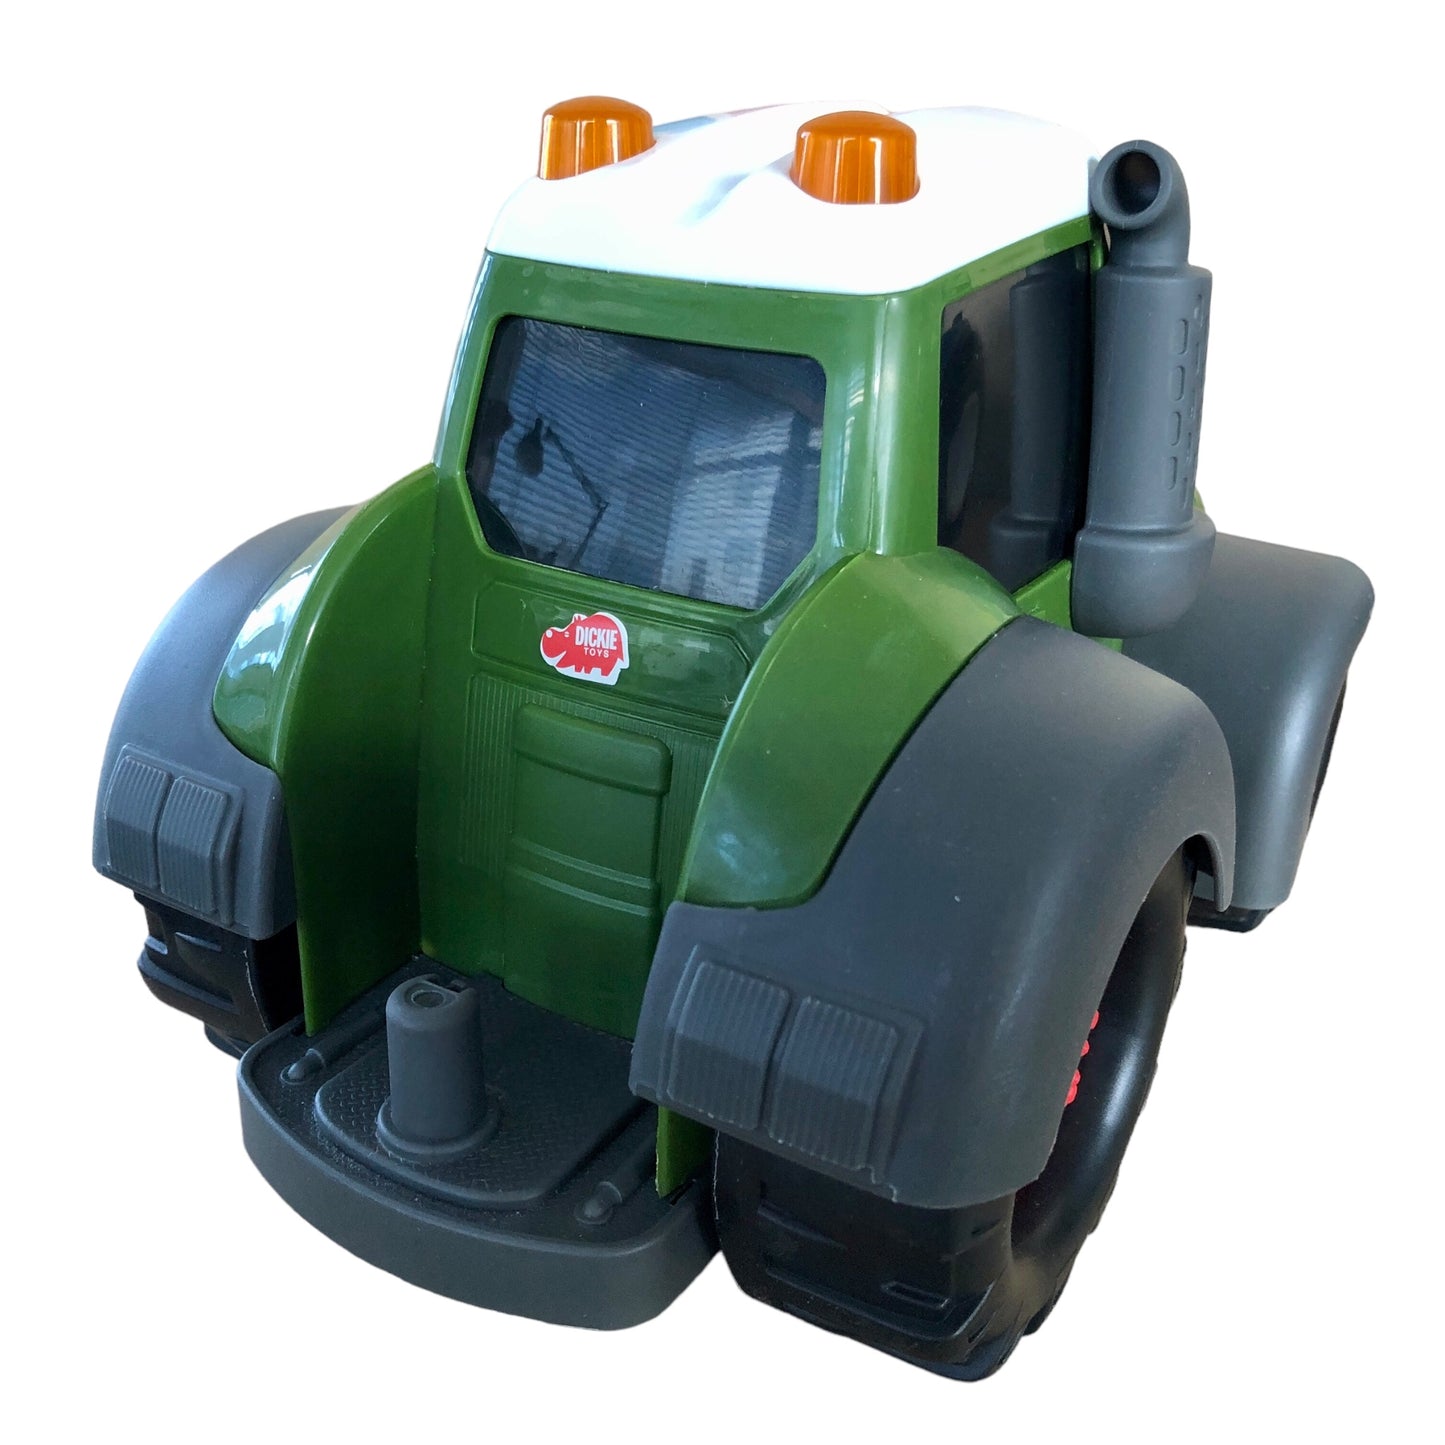 Dickie Toys - Tracteur Fendti